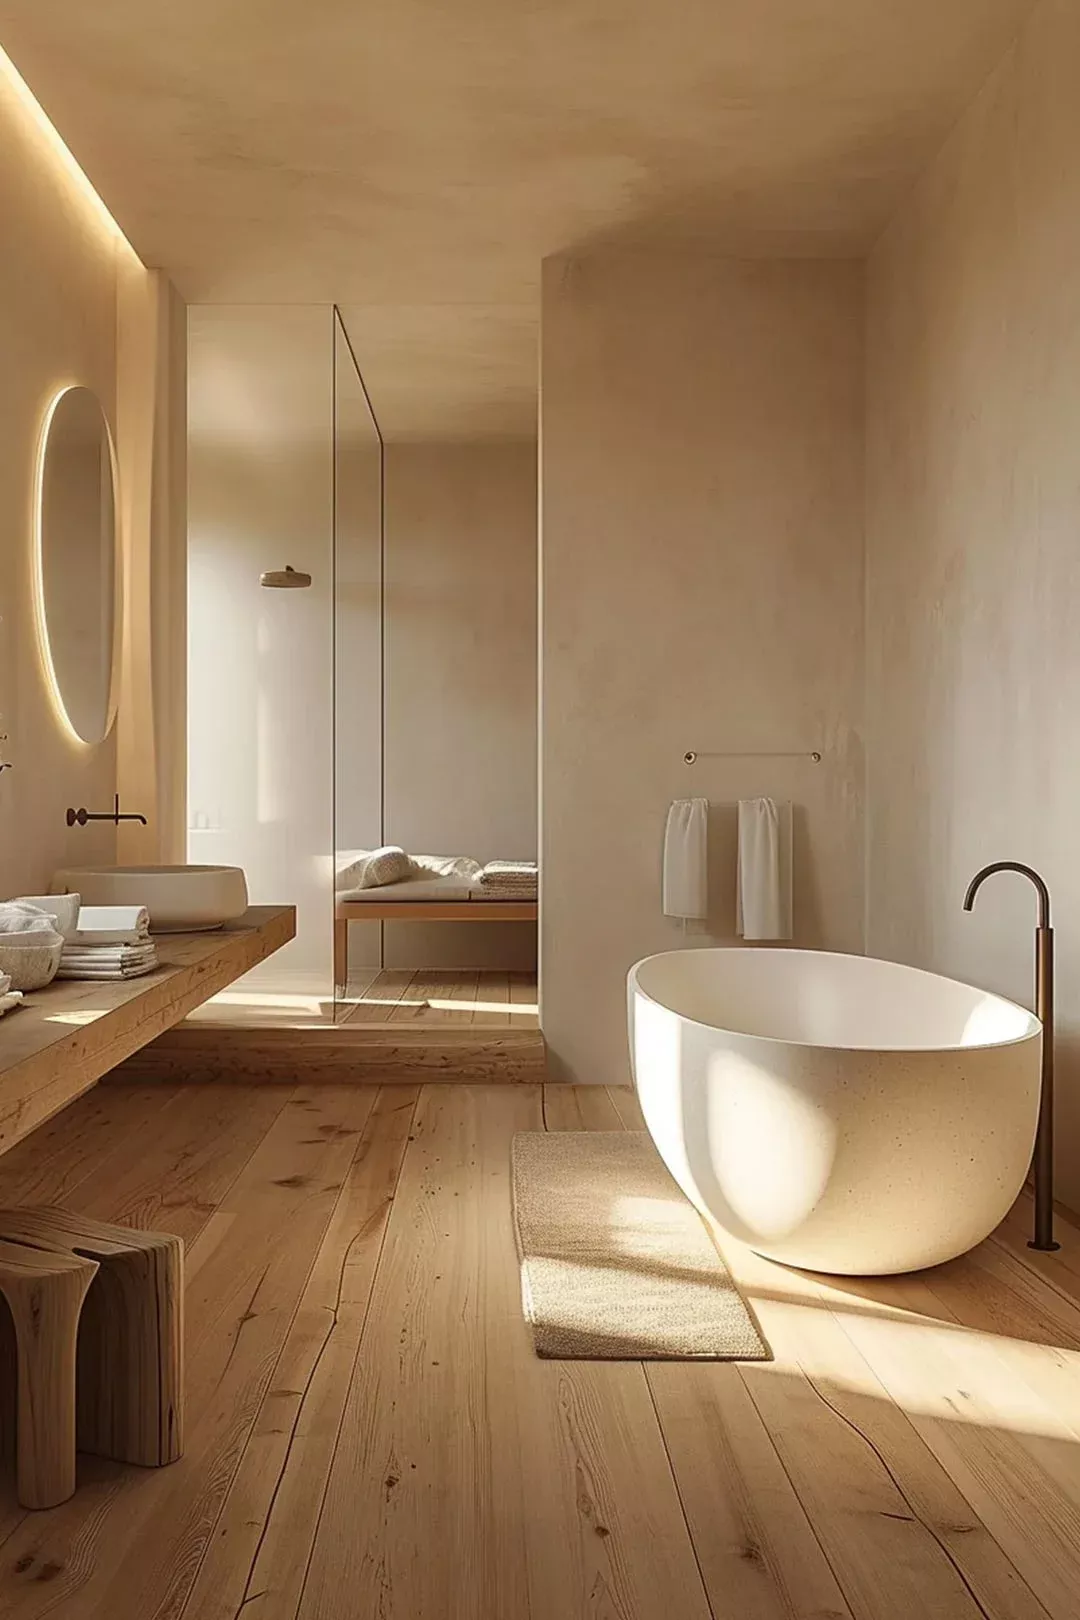 Simple Minimalist Bathroom How to Create a Stylish, Streamlined Bathroom Design